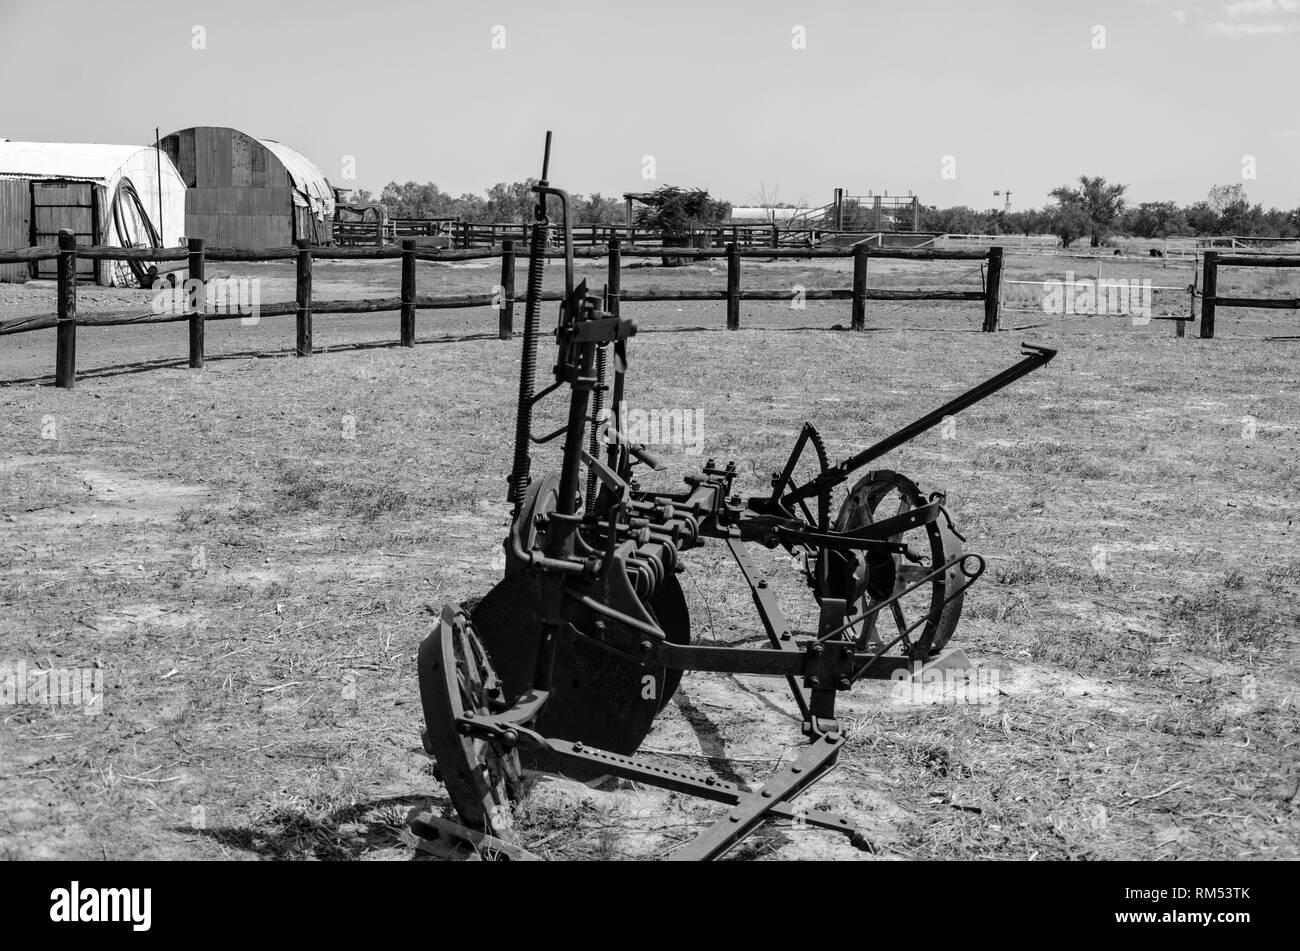 Old farm machinery on display Stock Photo